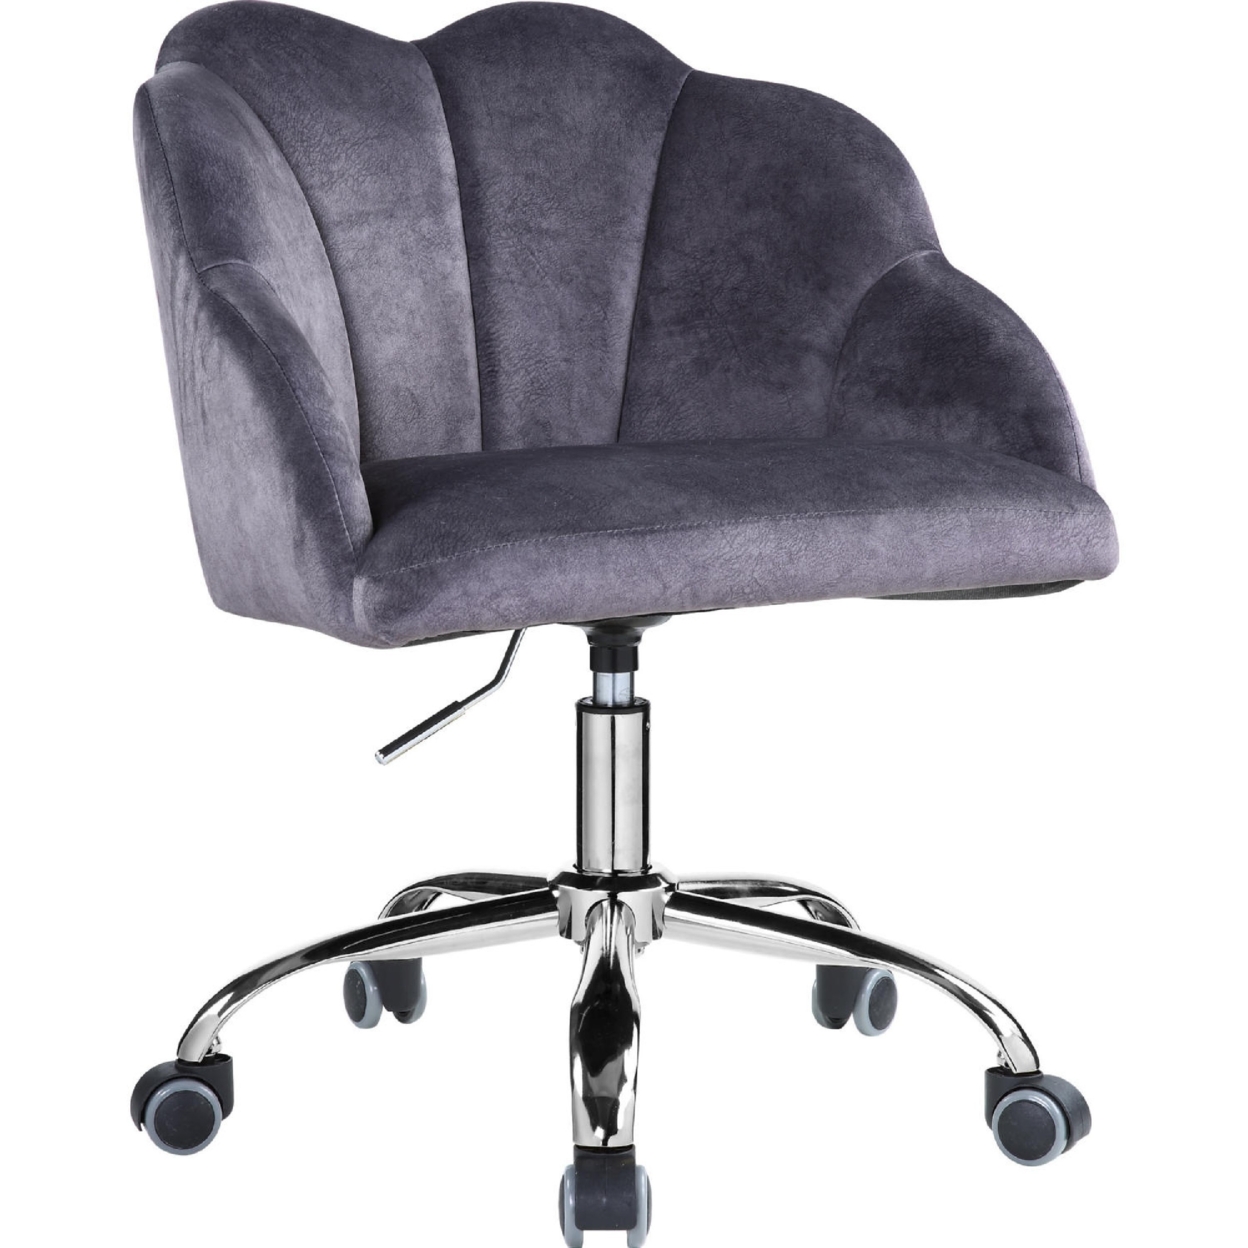 Swivel Office Chair With Shell Design Backrest, Gray And Chrome- Saltoro Sherpi